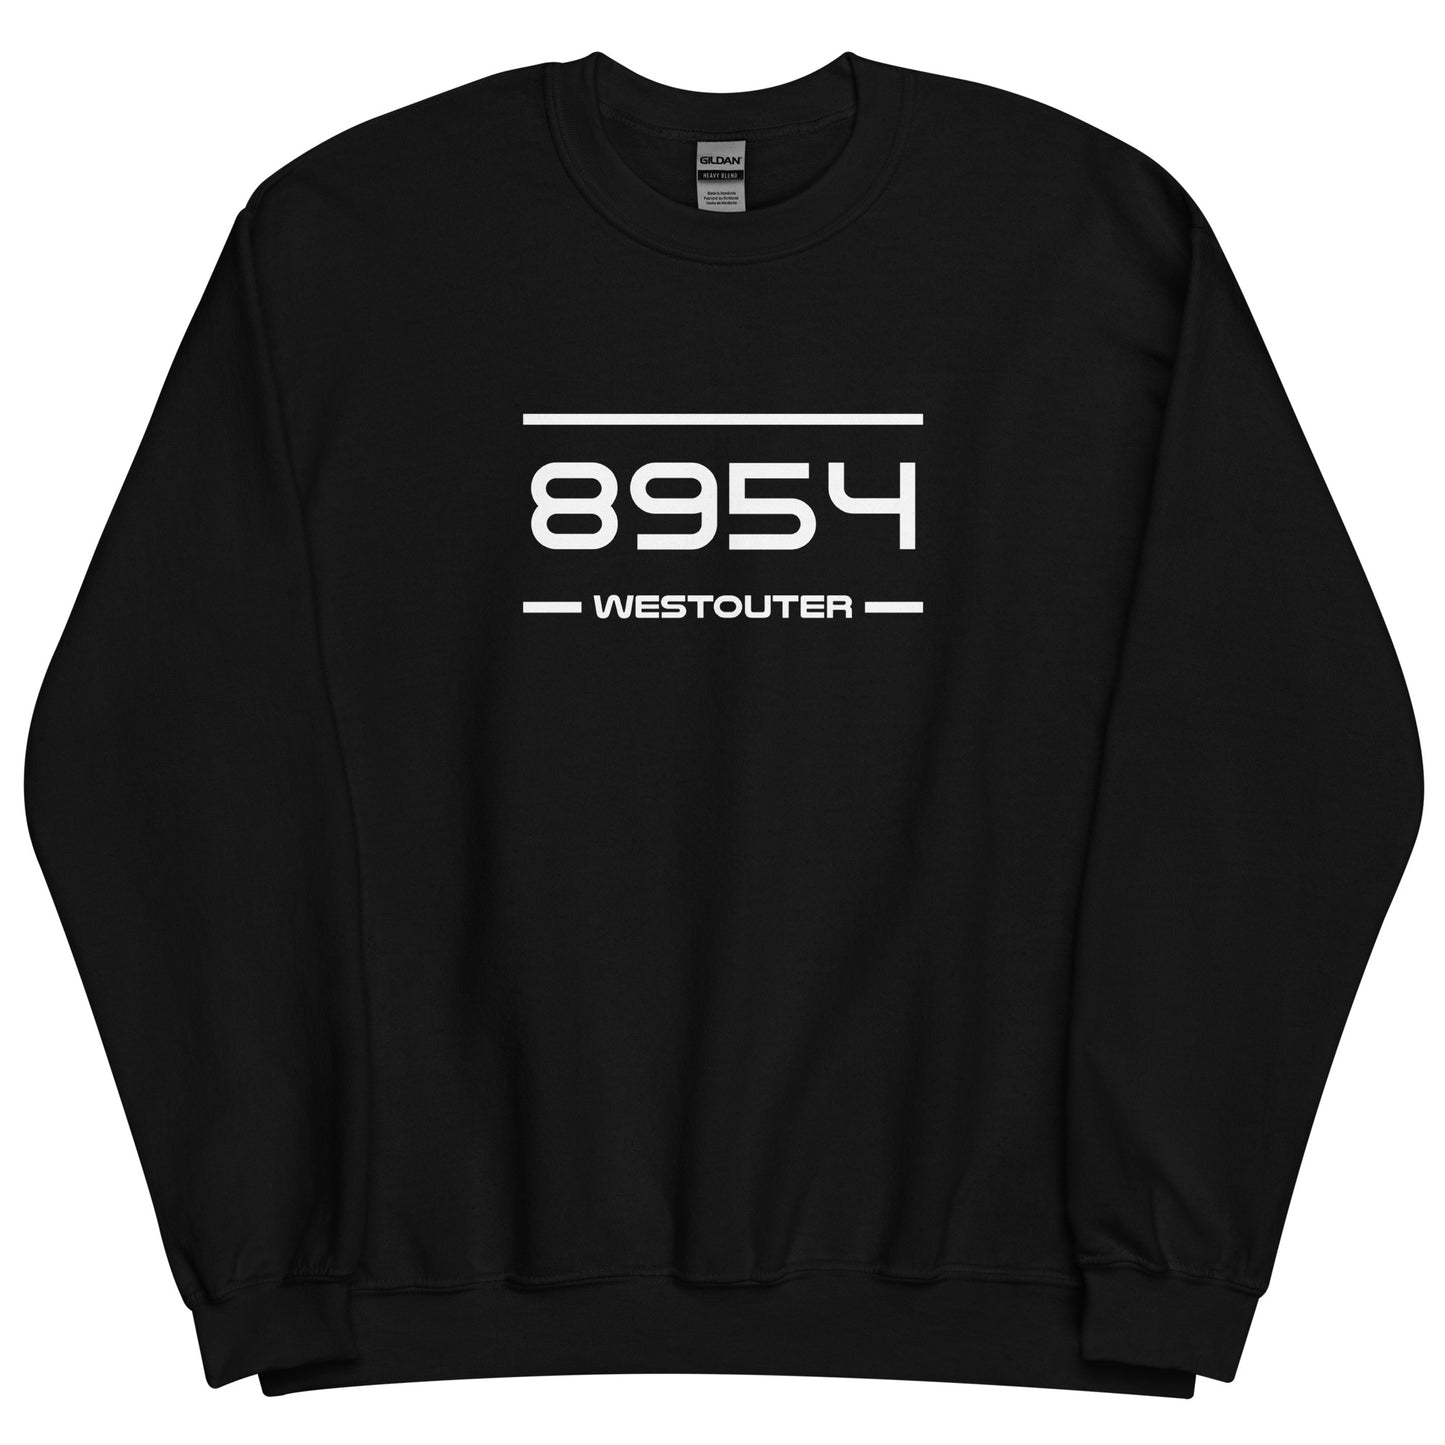 Sweater - 8954 - Westouter (M/V)